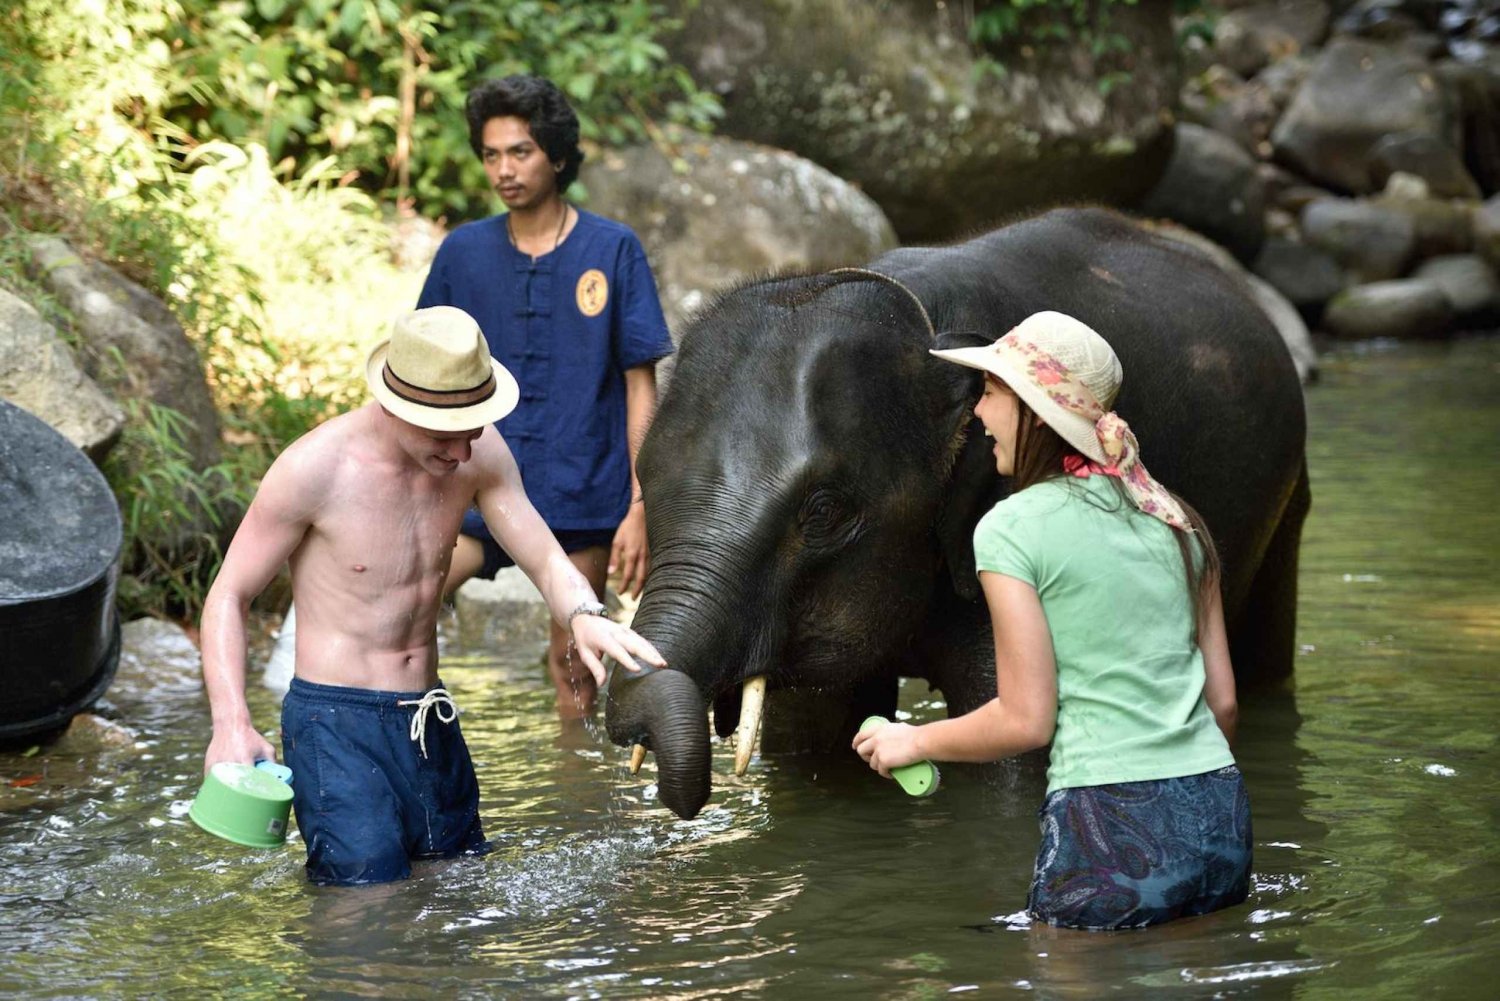 Z Phuket: Opieka nad słoniami podczas raftingu i tyrolki